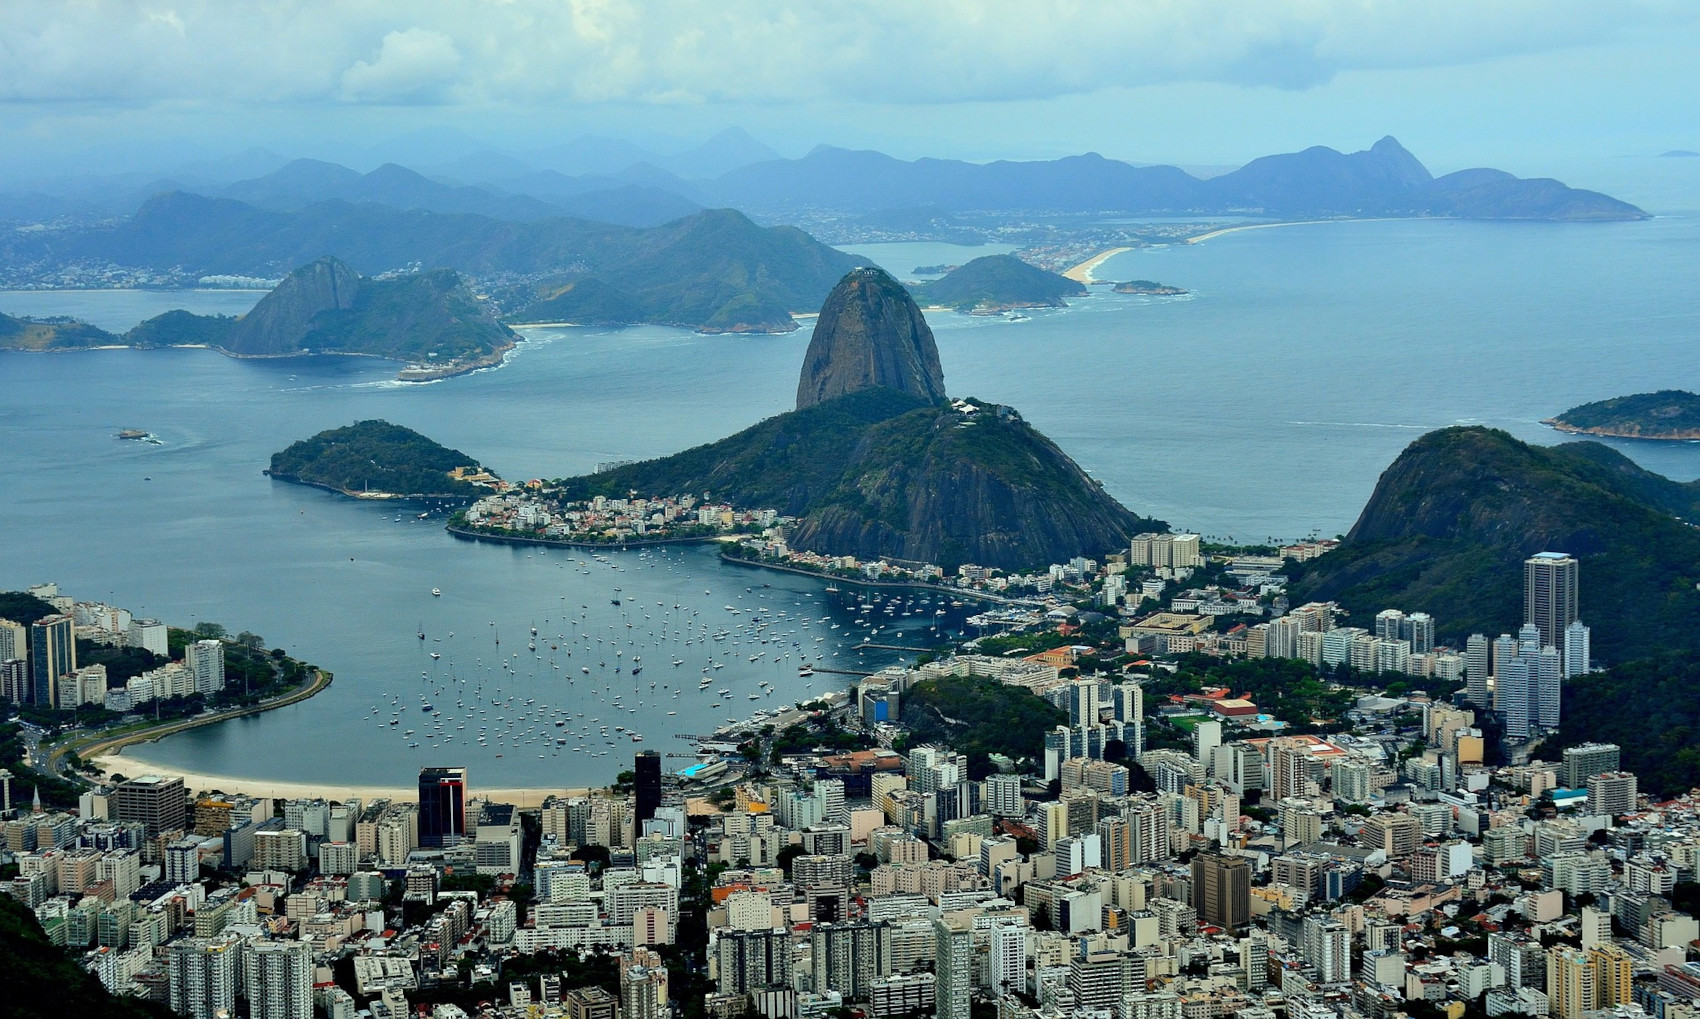 Rio de Janeiro - Image by Chulhwan Yoon from Pixabay